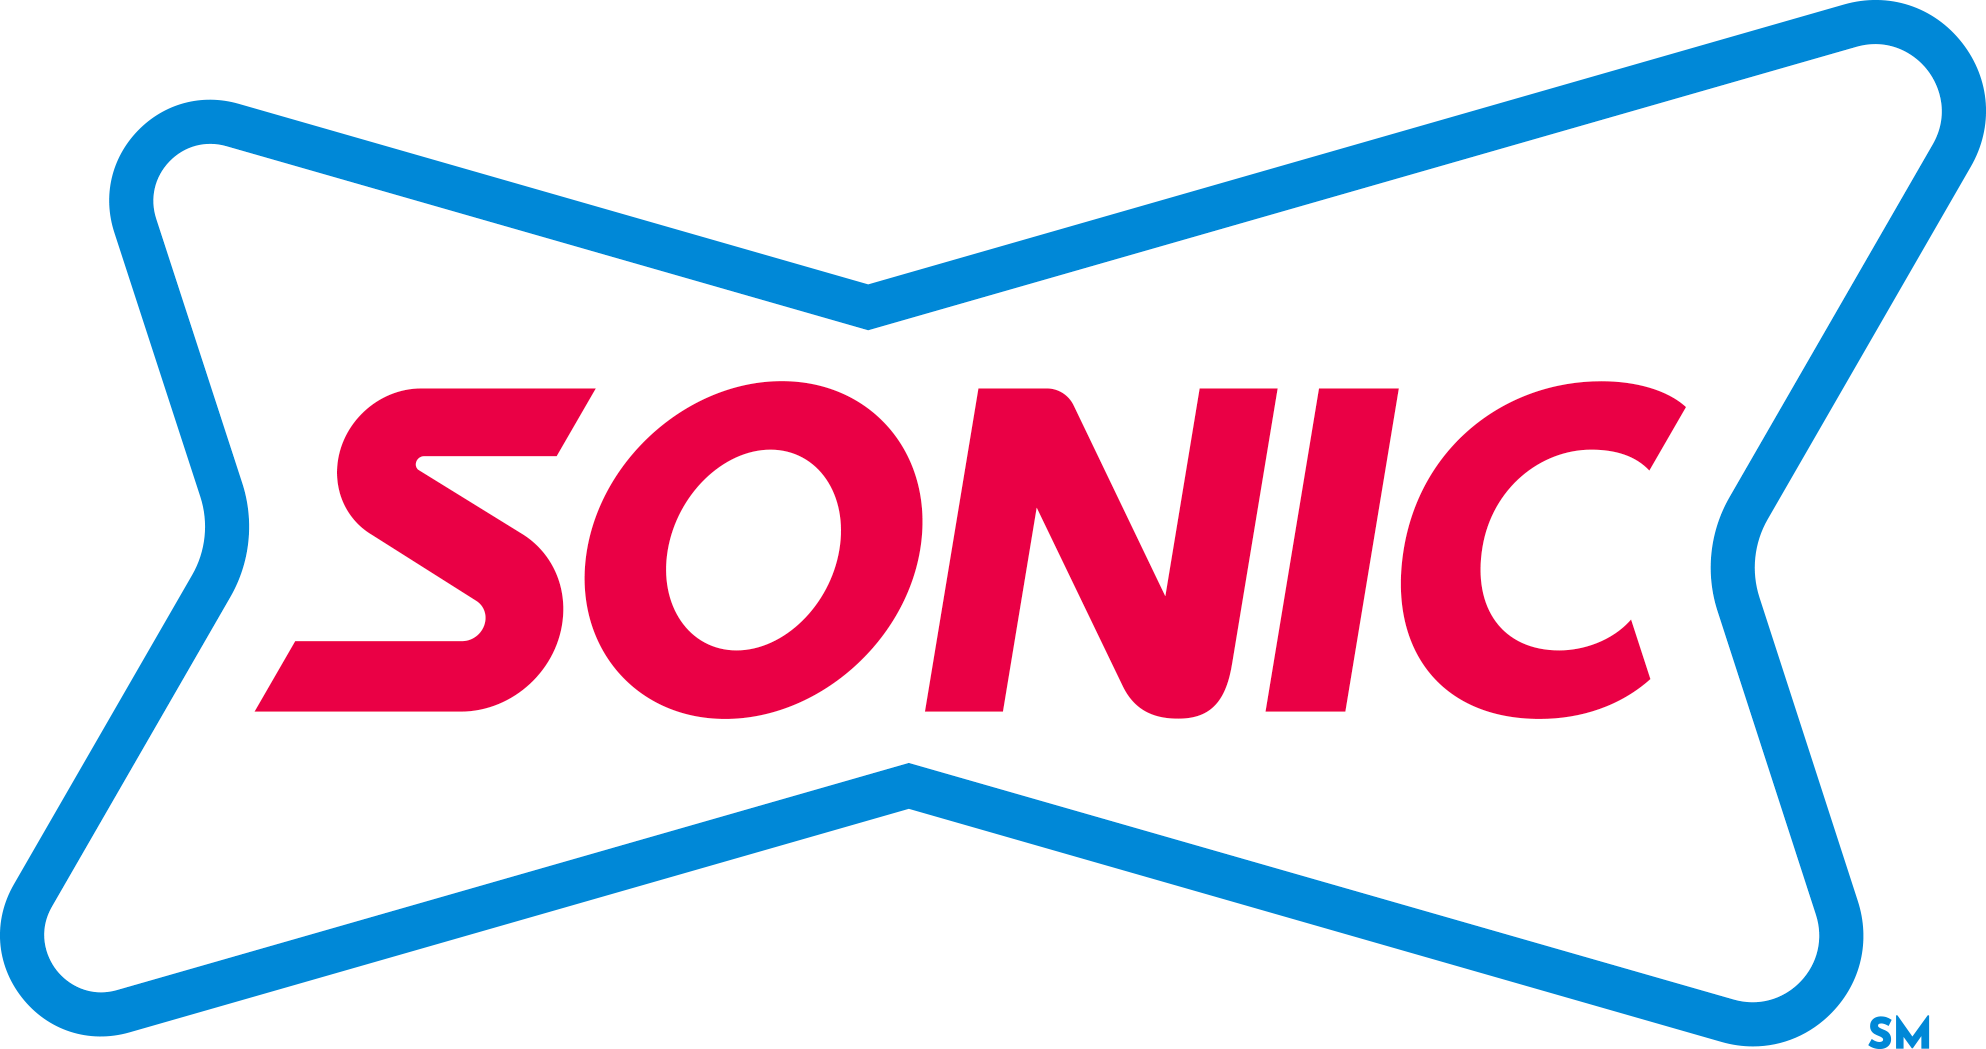 Sonic drive-in logo